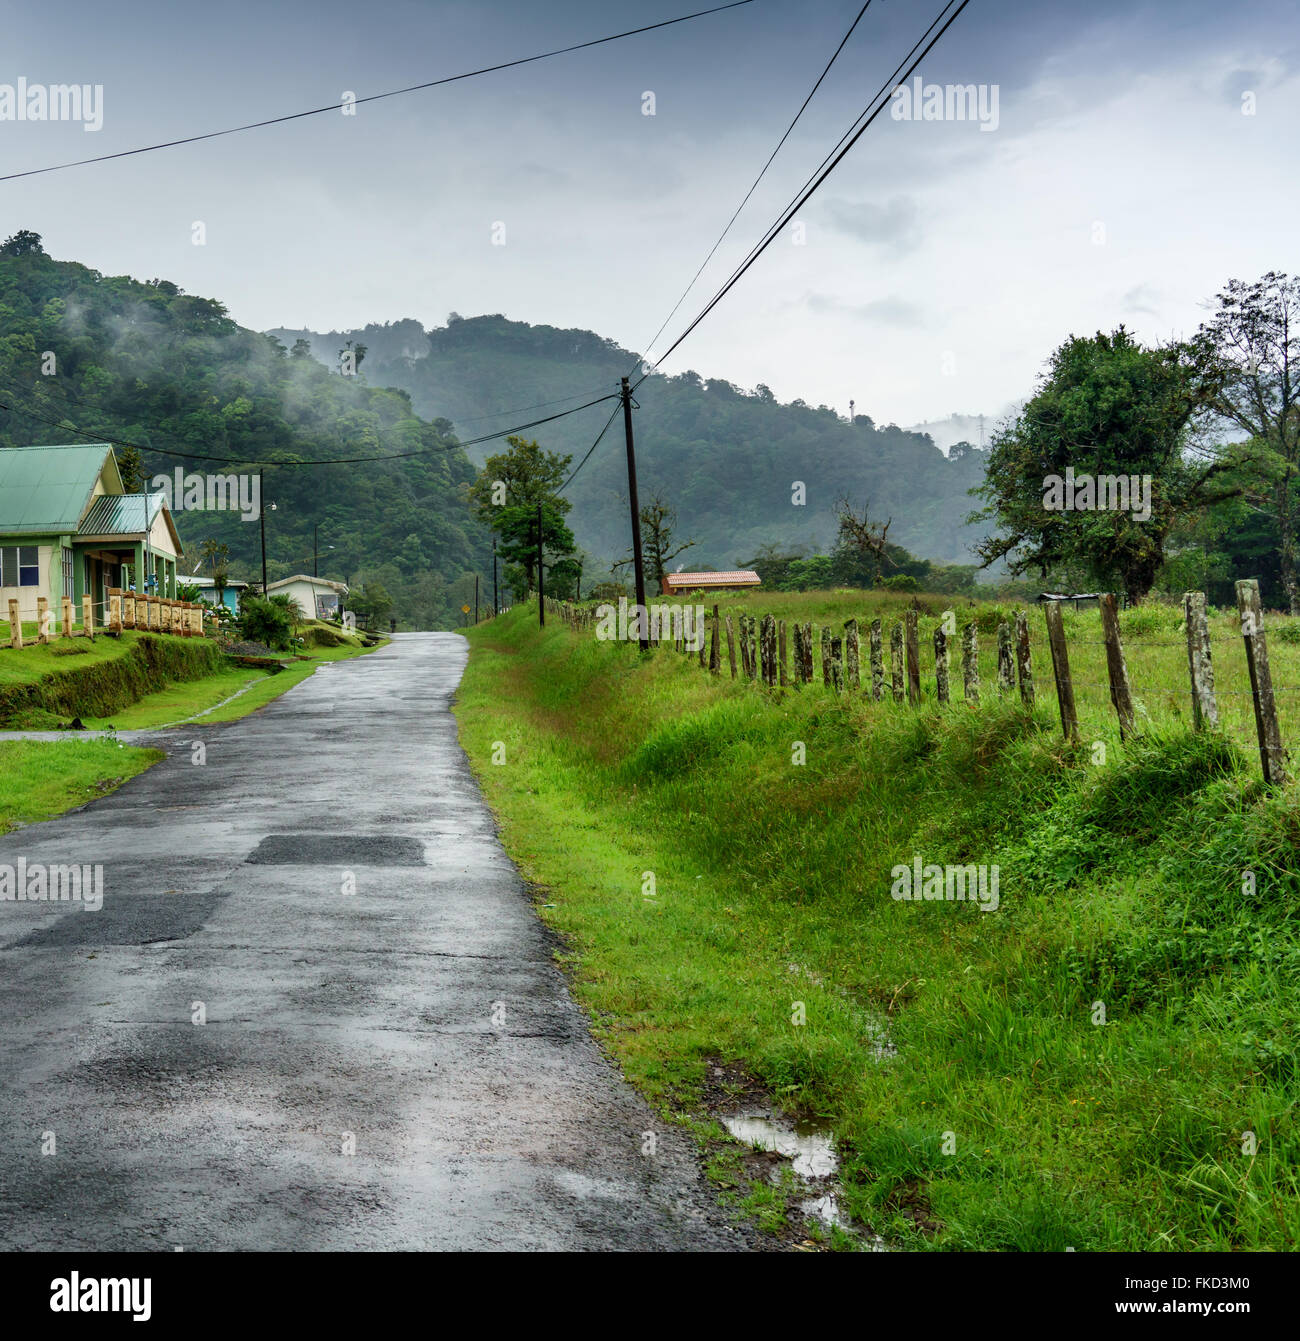 Empty road passing through landscape, Costa Rica Stock Photo